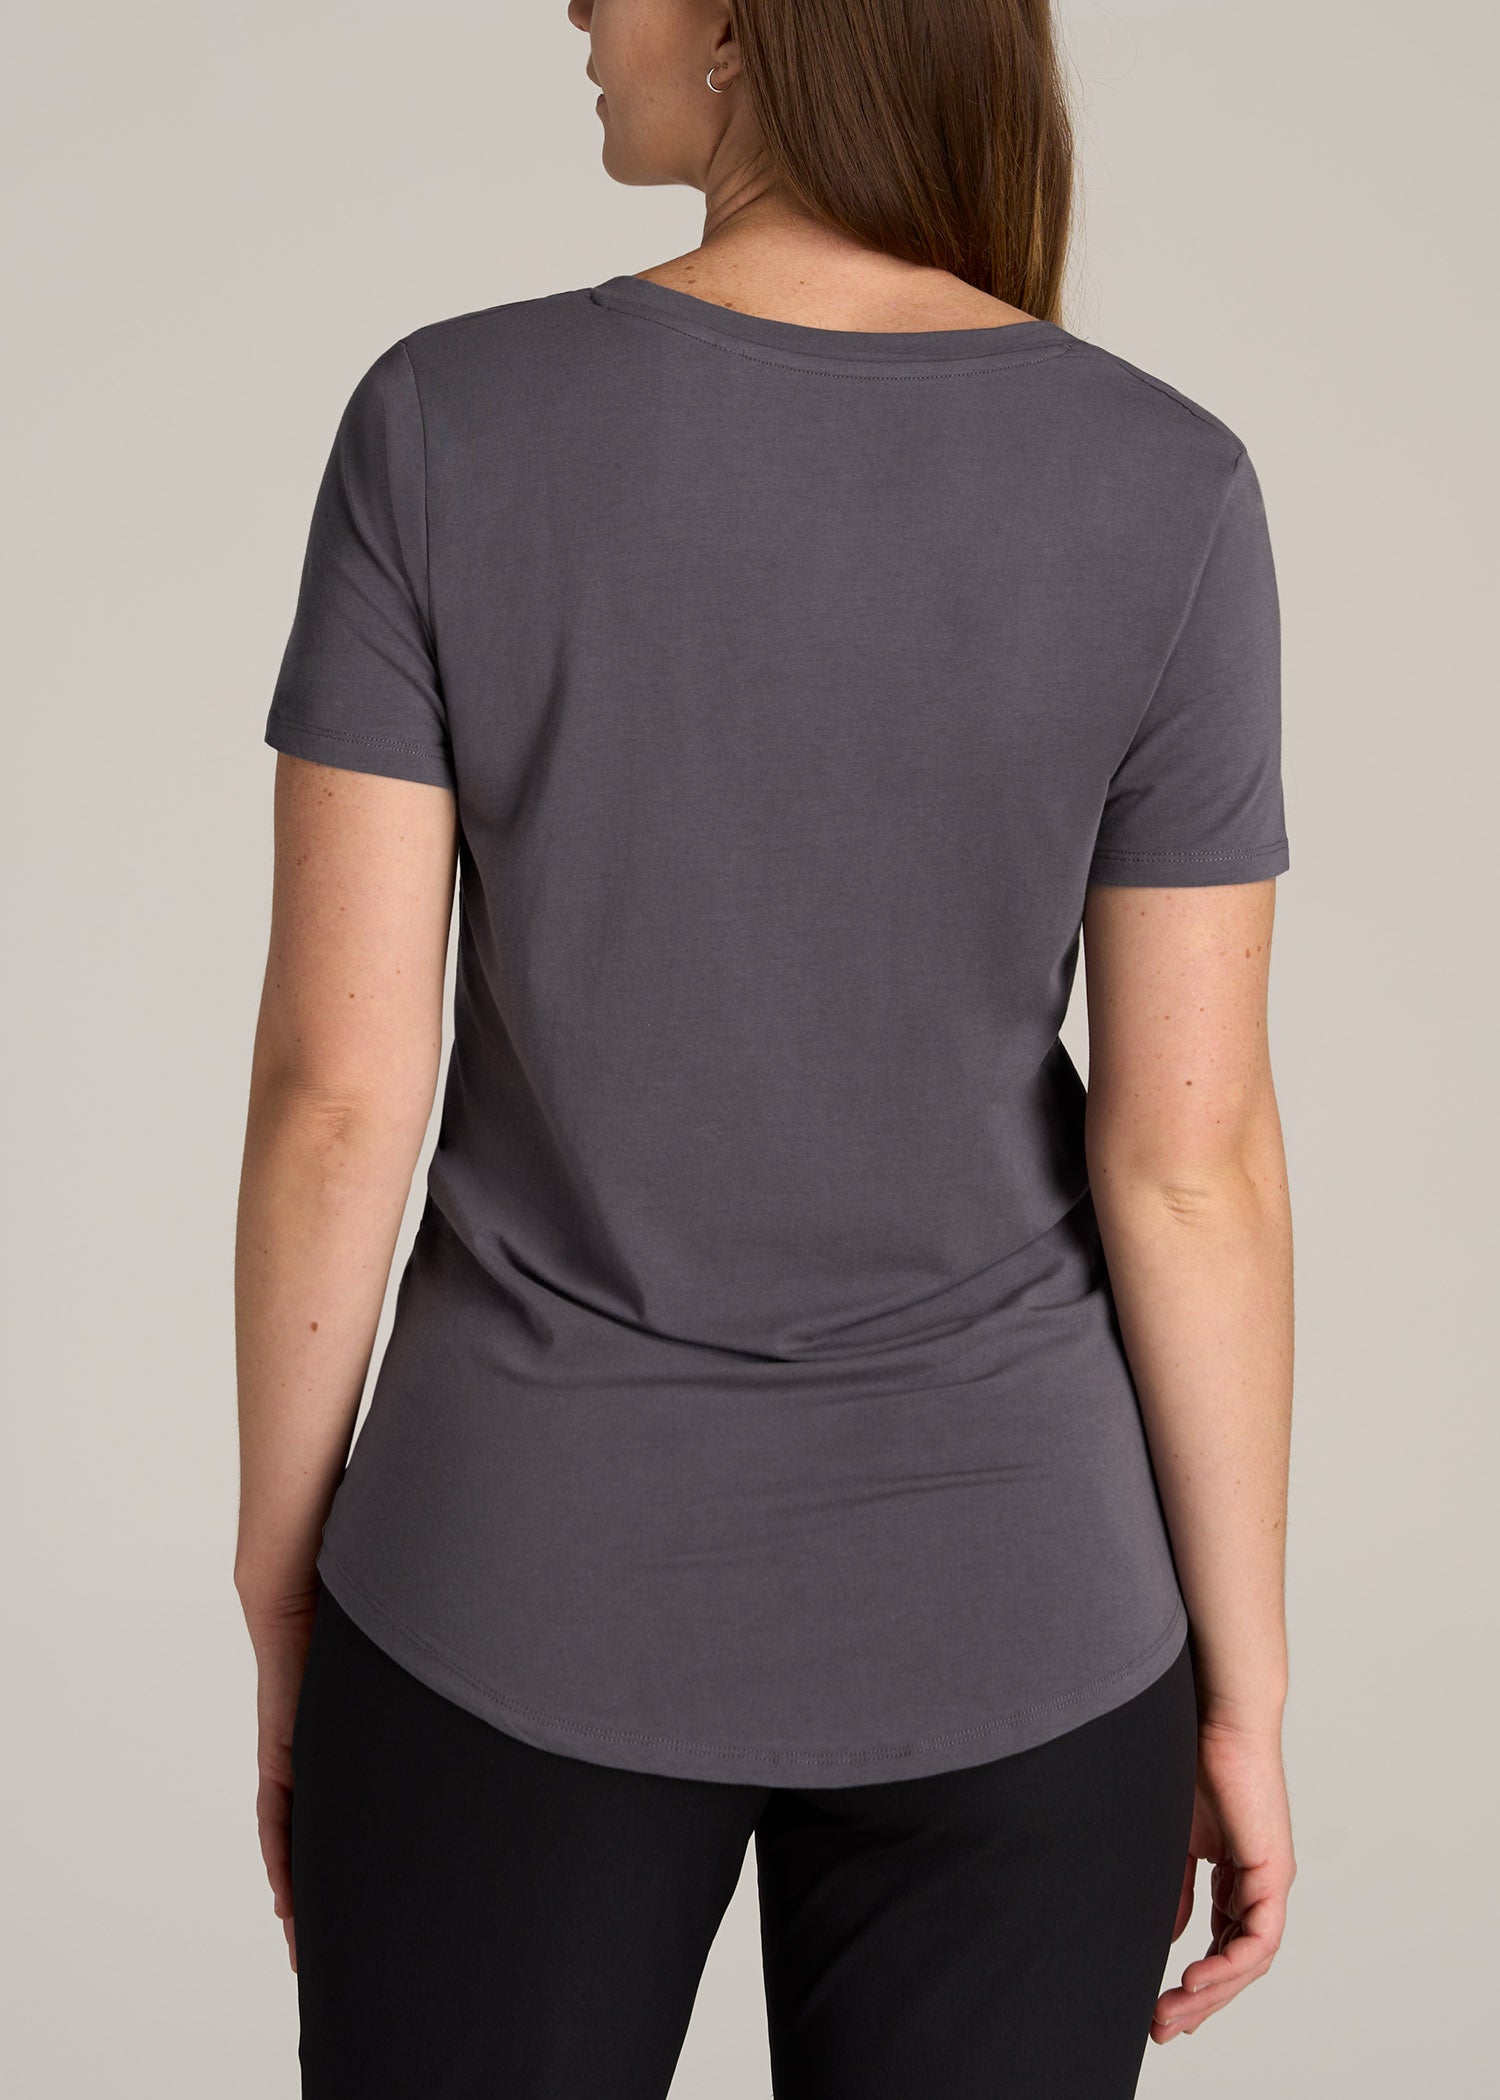 Long Sleeve V-neck Tee Shirt (Small, Charcoal) at  Women's